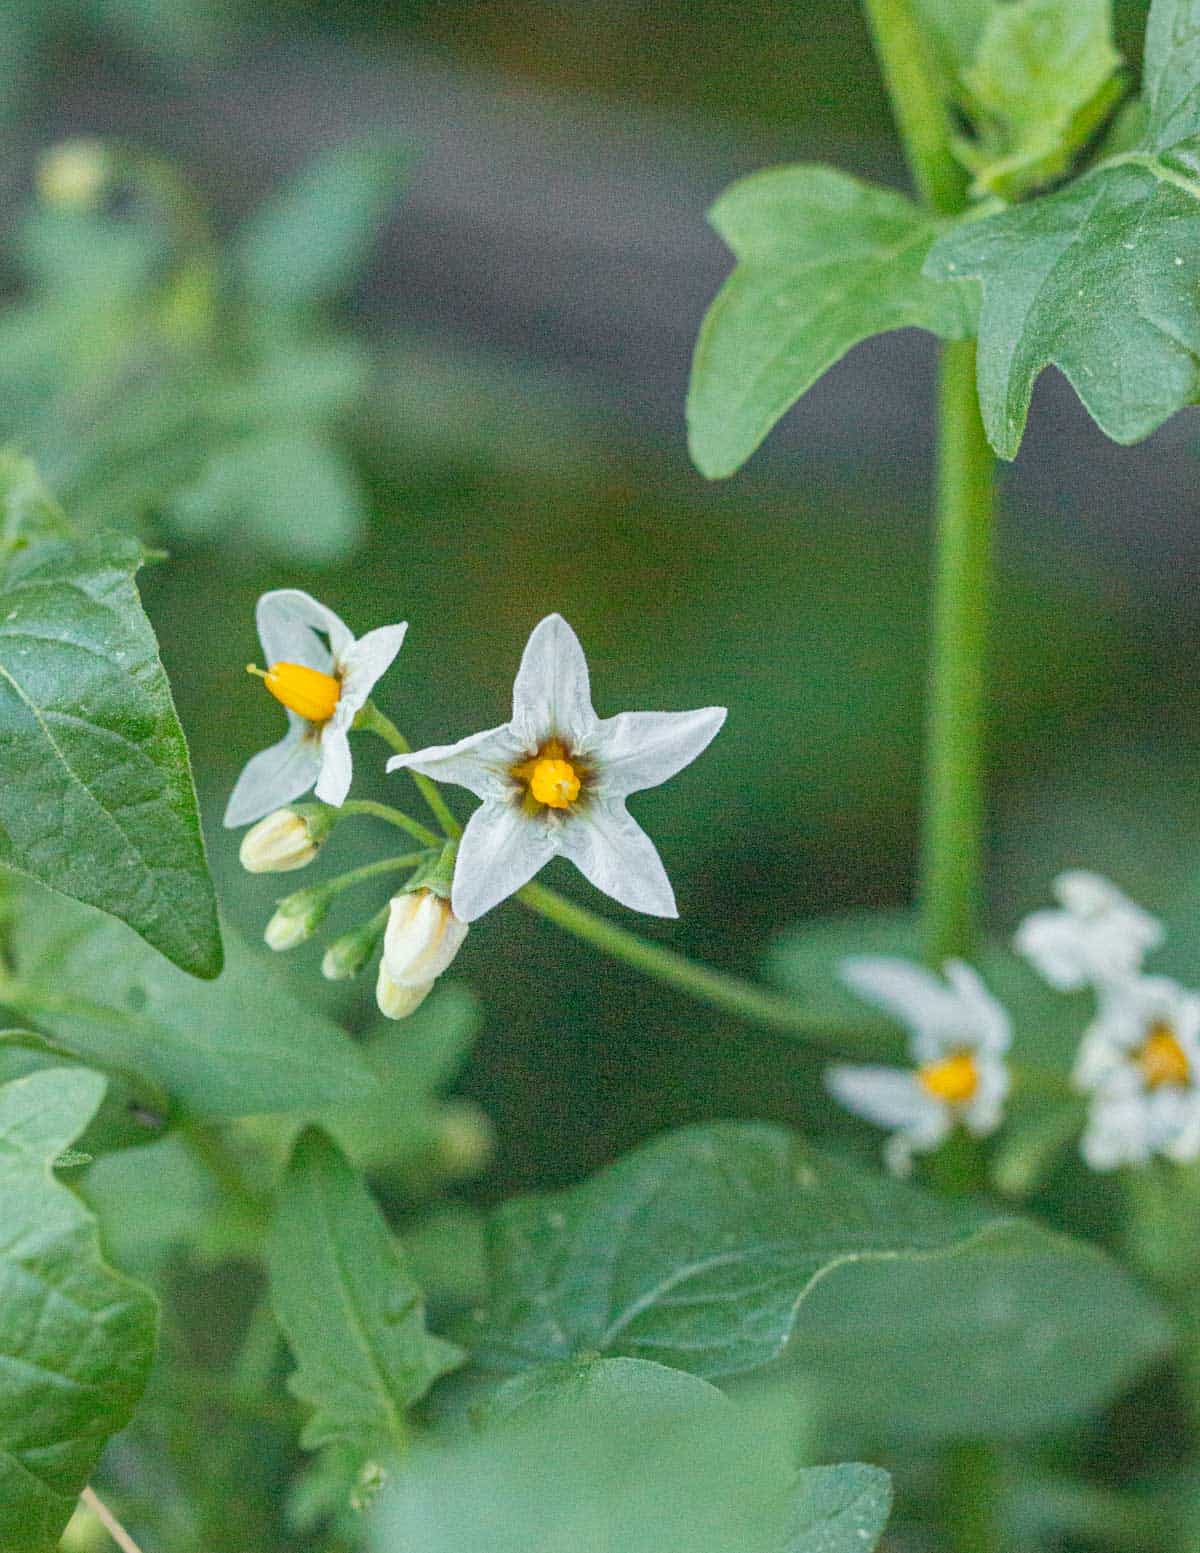 Tell-tale 5-pointed flowers of Solanum americanum or black nightshade flowers in Arizona.